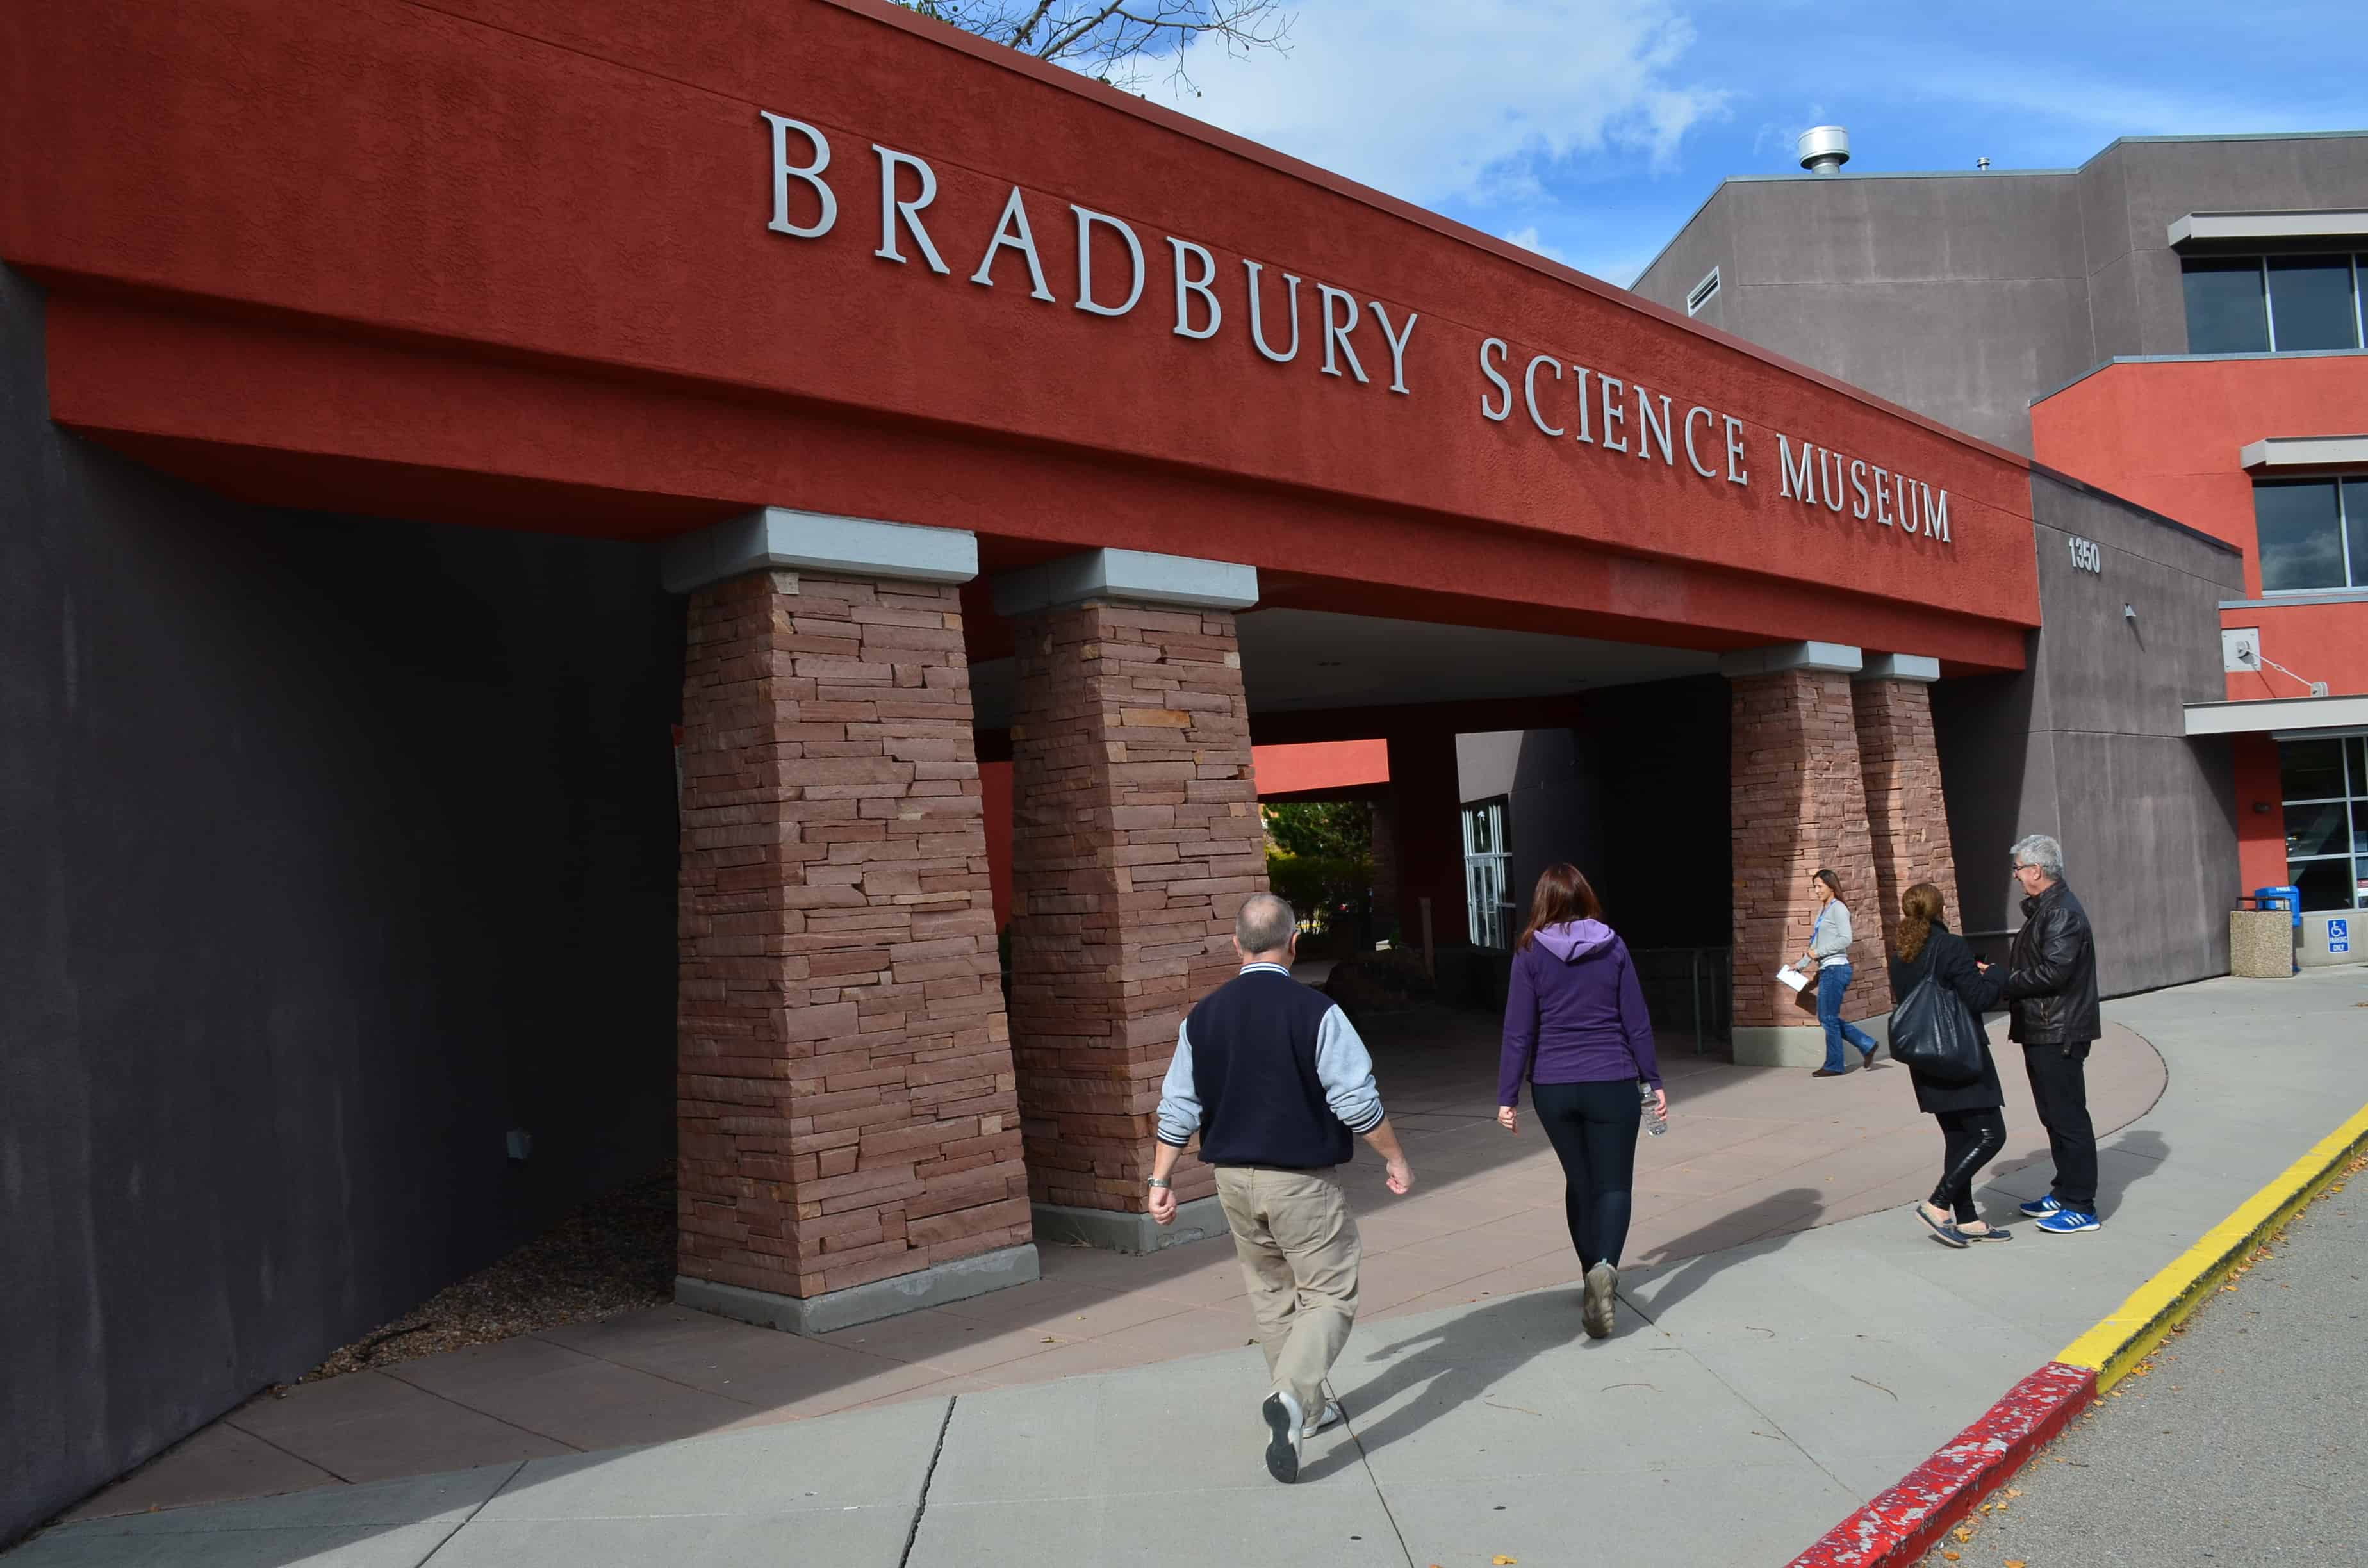 Bradbury Science Museum in Los Alamos, New Mexico